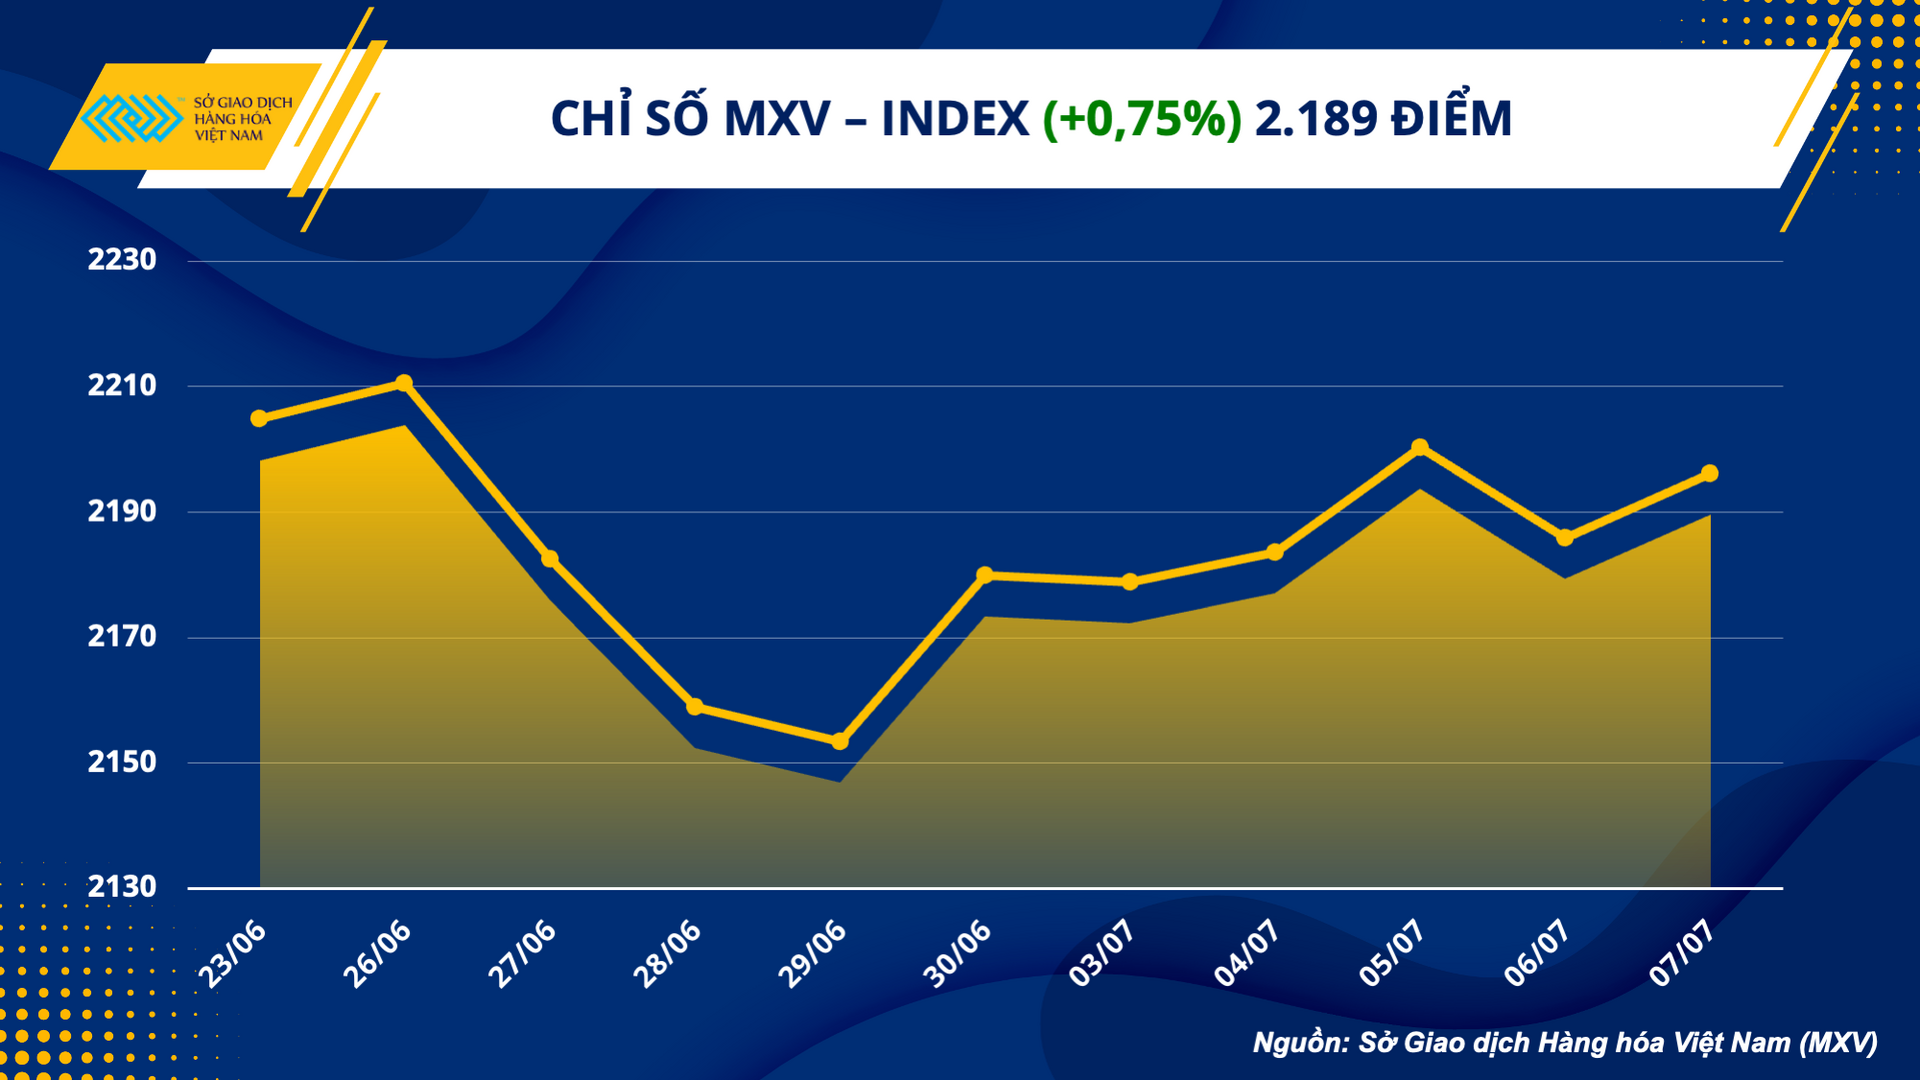 1. mxv - index (24)